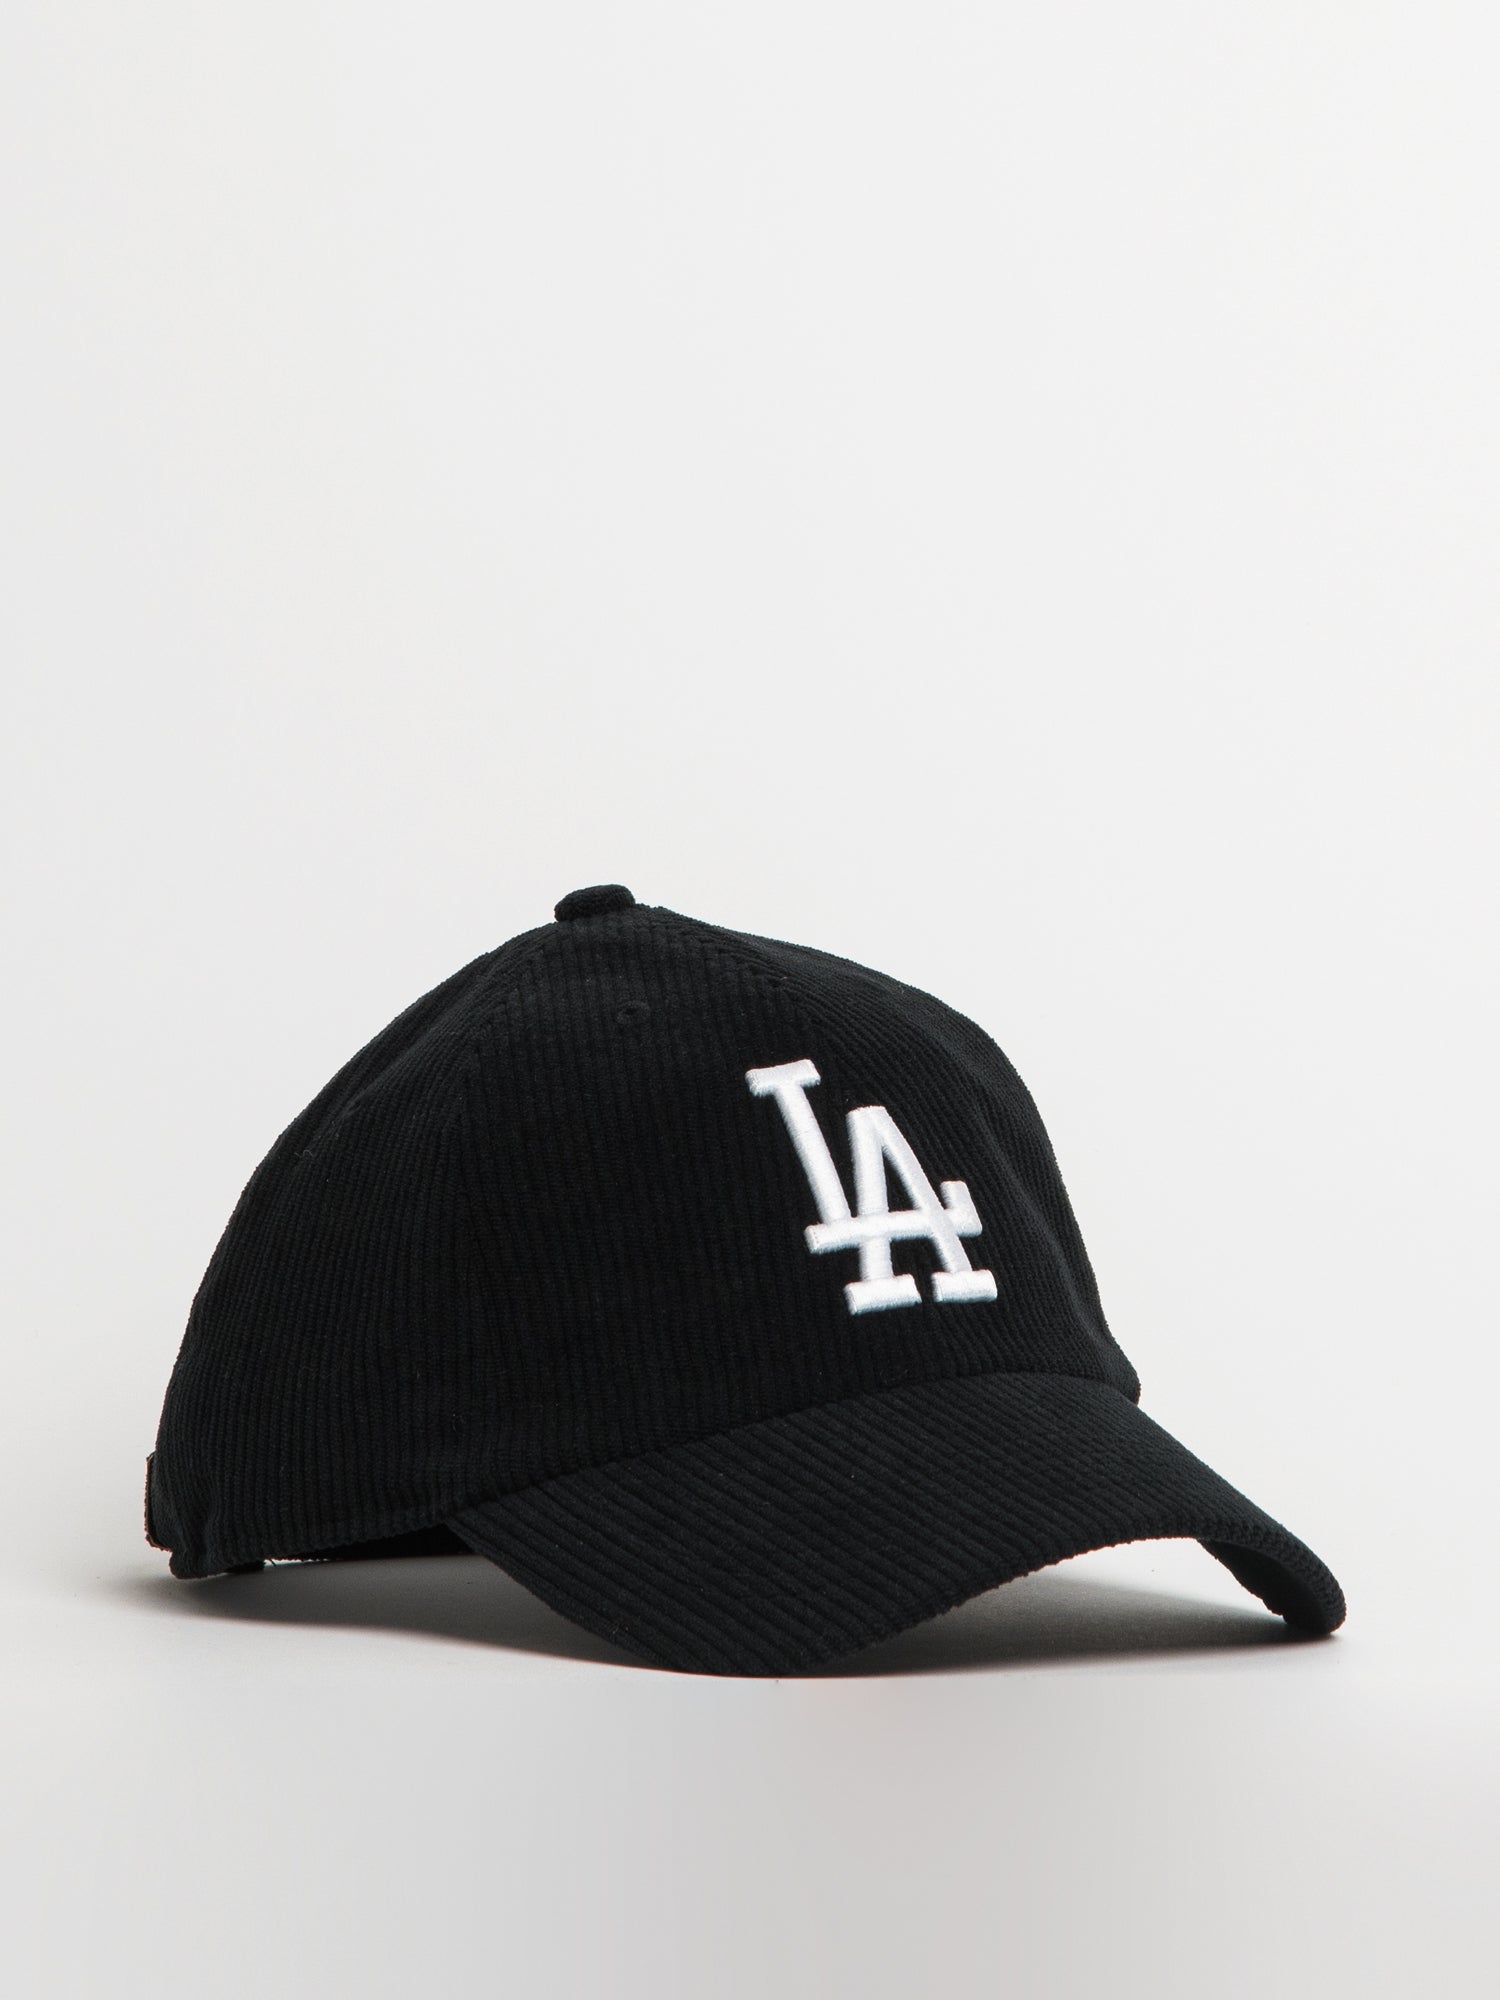 47 47 Mlb La Dodgers Thick Cord Hat Blue 1SZ